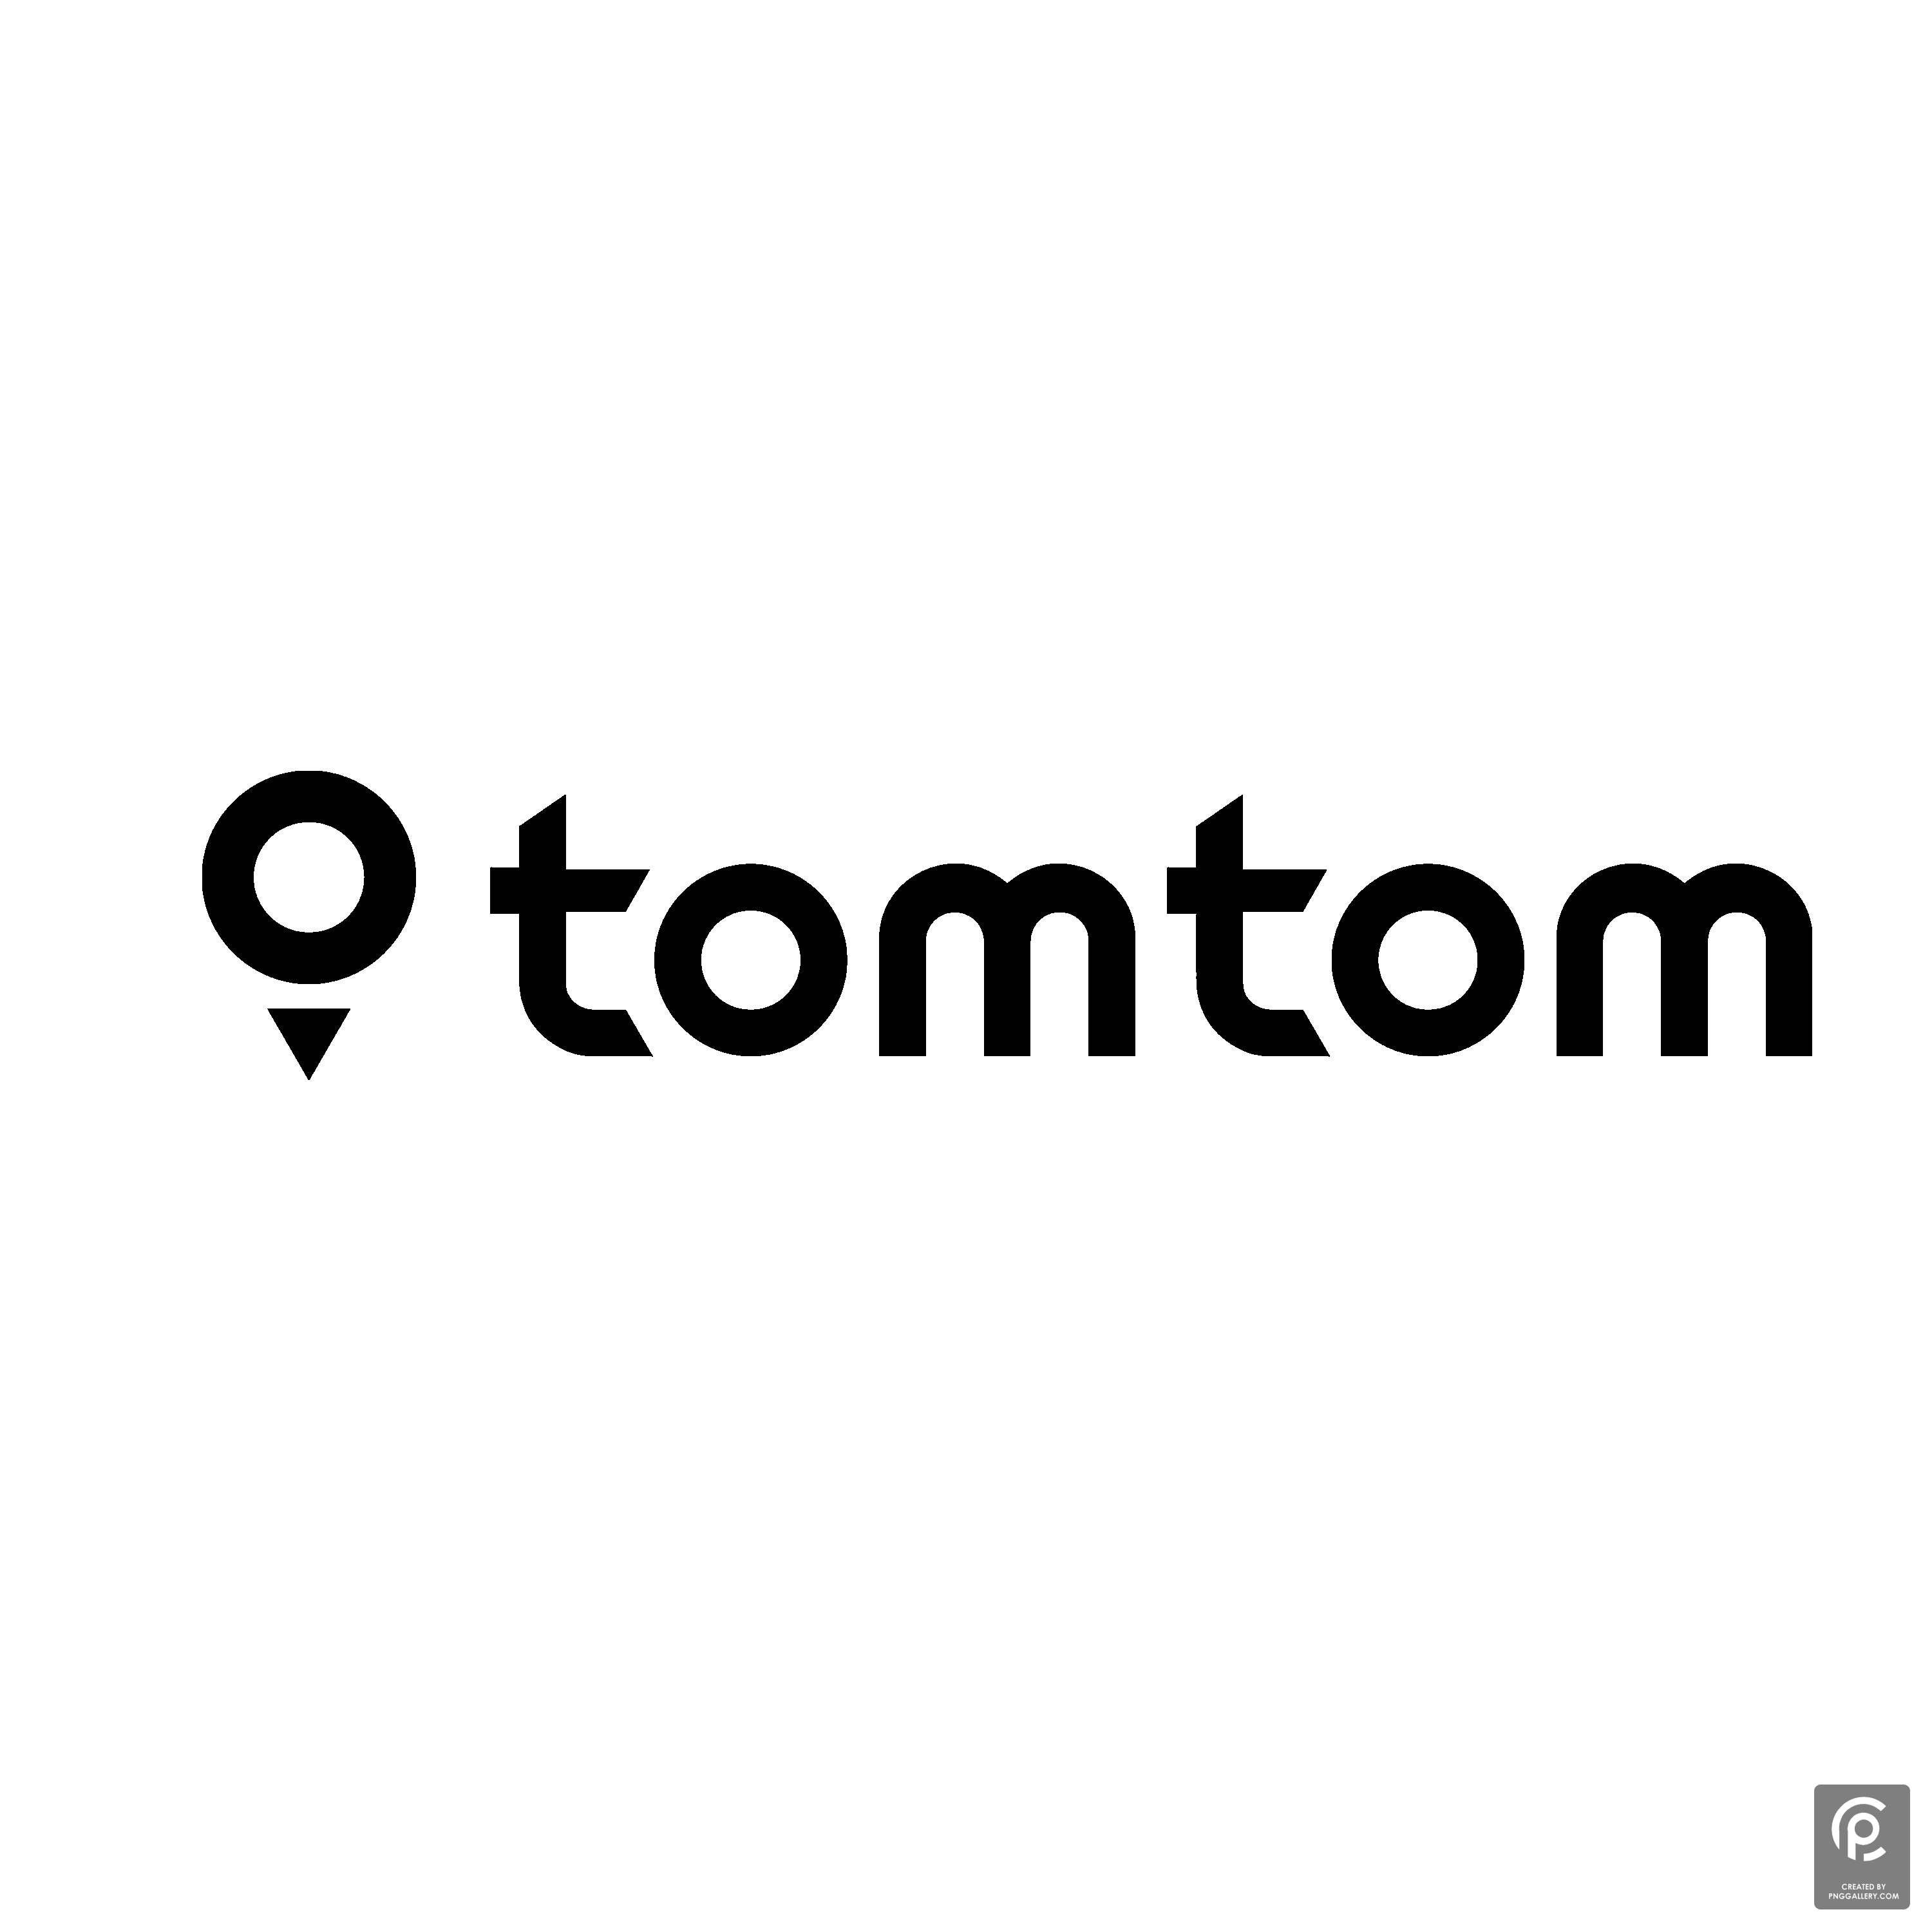 Tomtom Logo Transparent Gallery